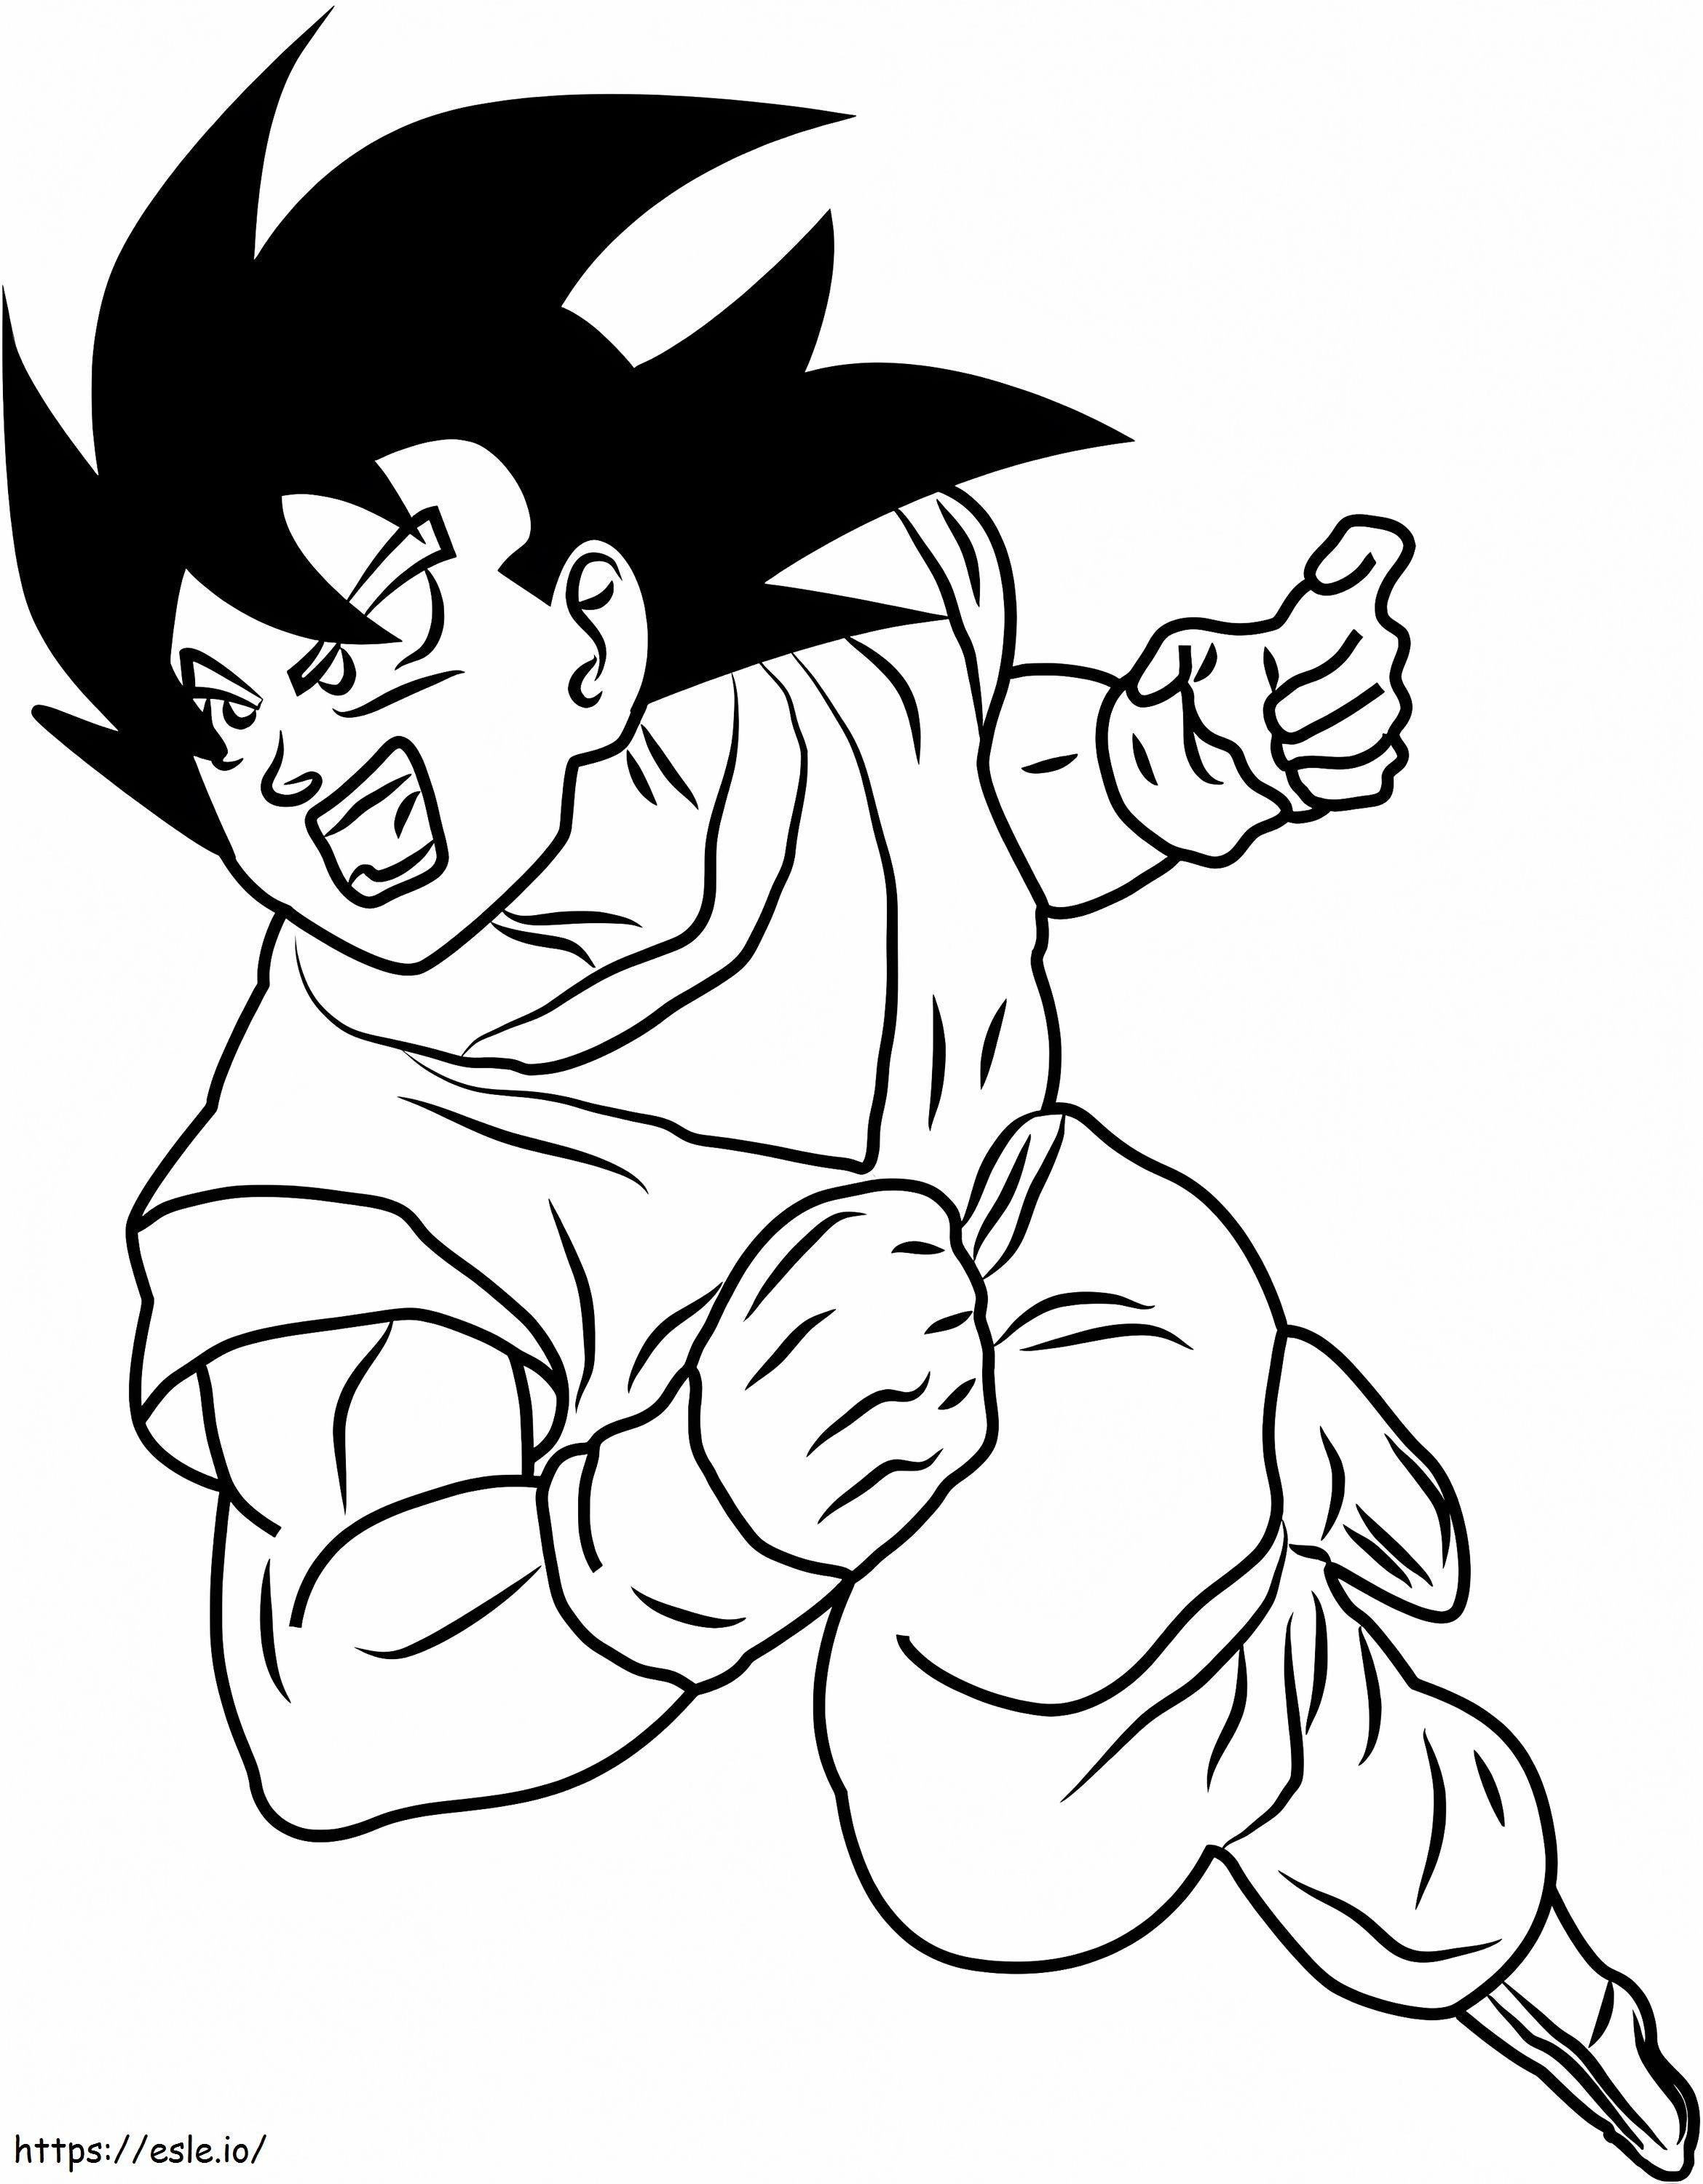 Son Goku Attacks coloring page